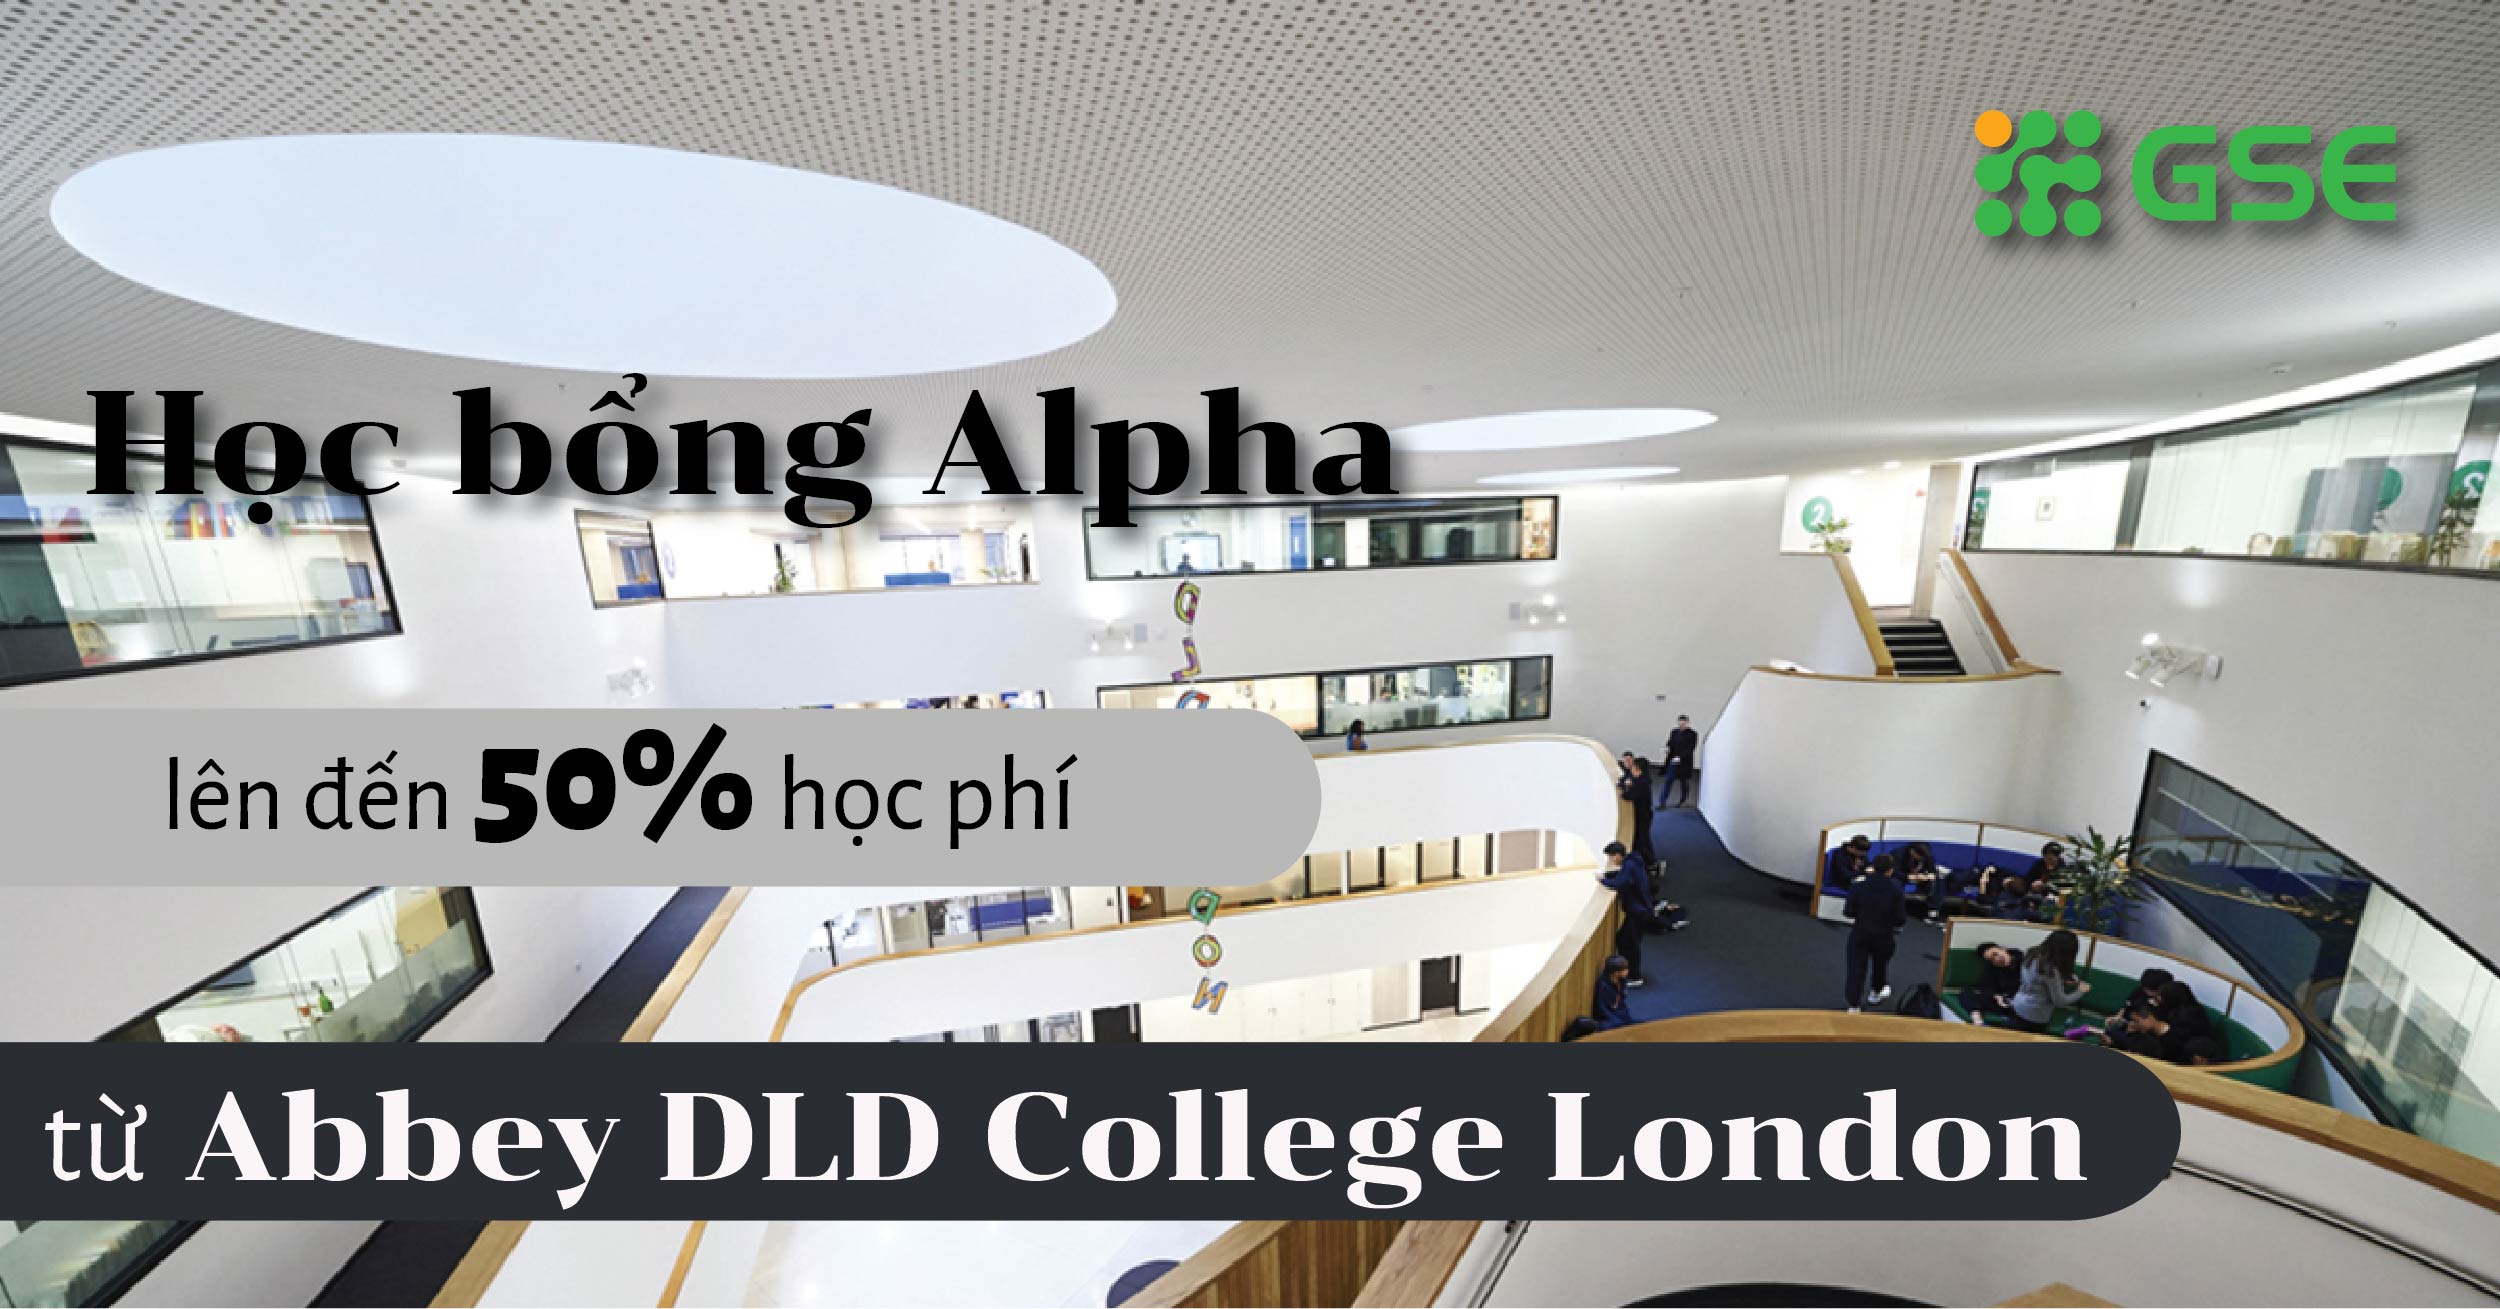 hoc bong alpha abbey dld college london 01